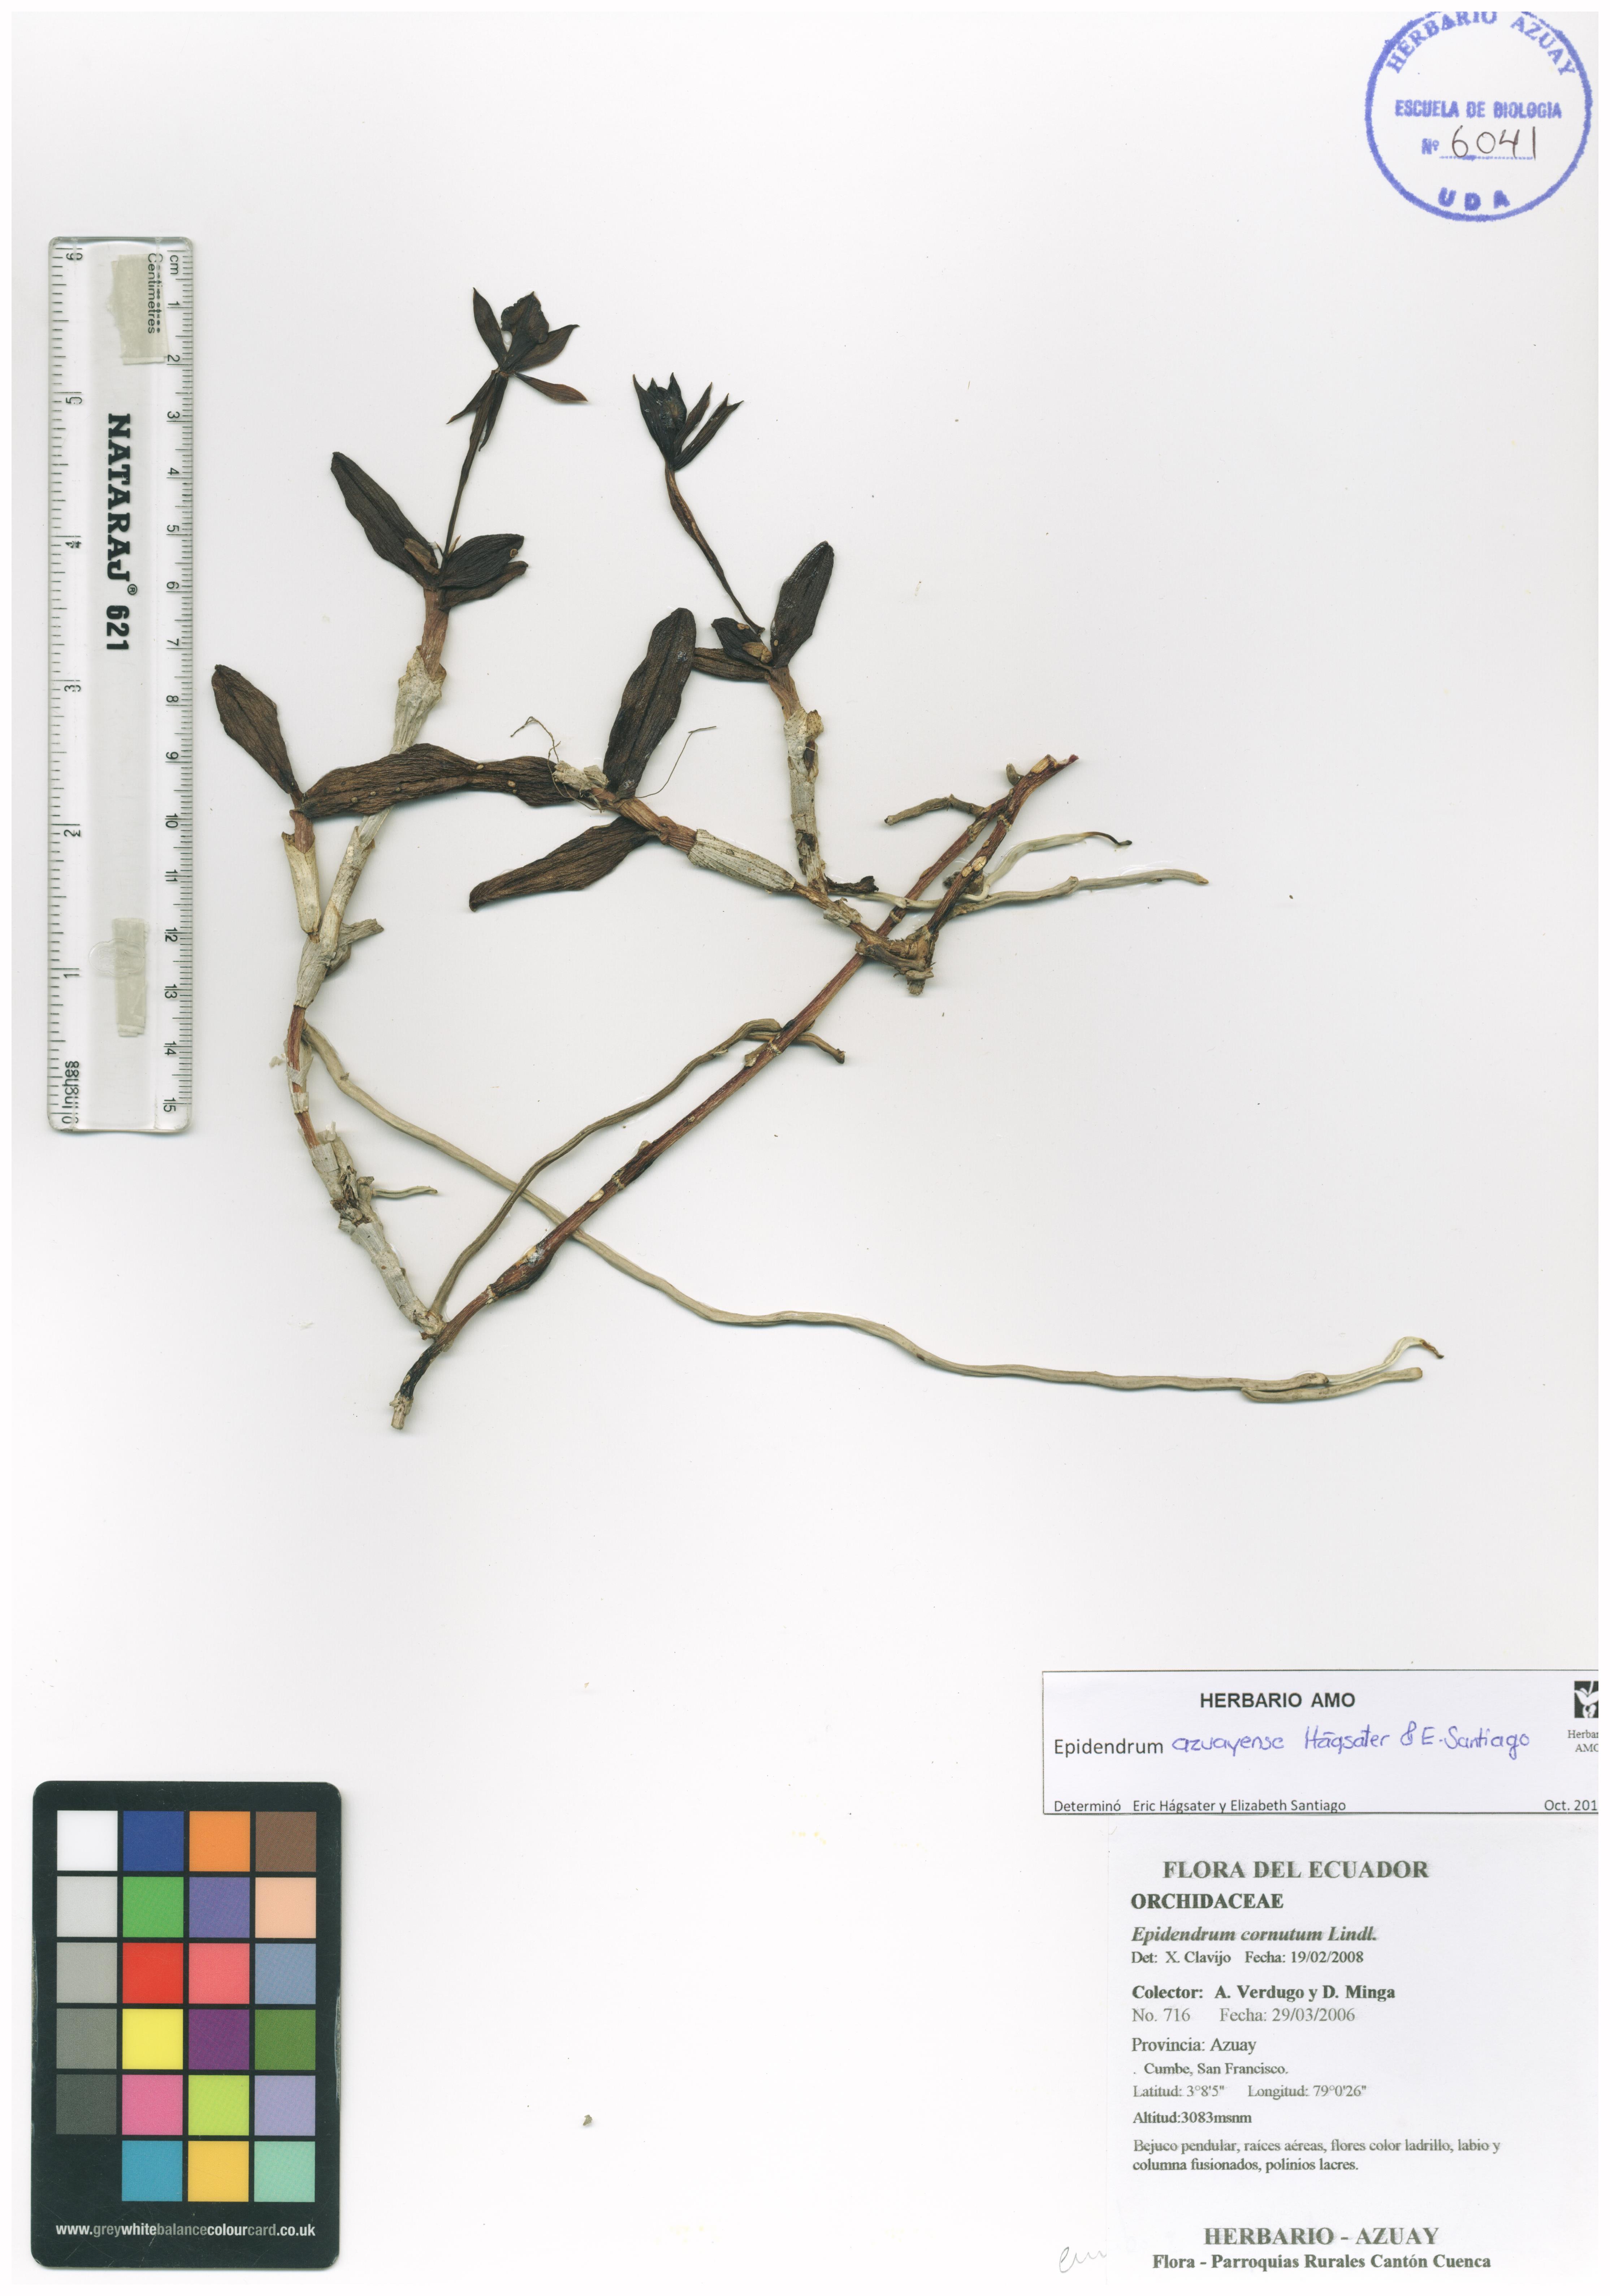 Epidendrum azuayense Hágsater & Dodson